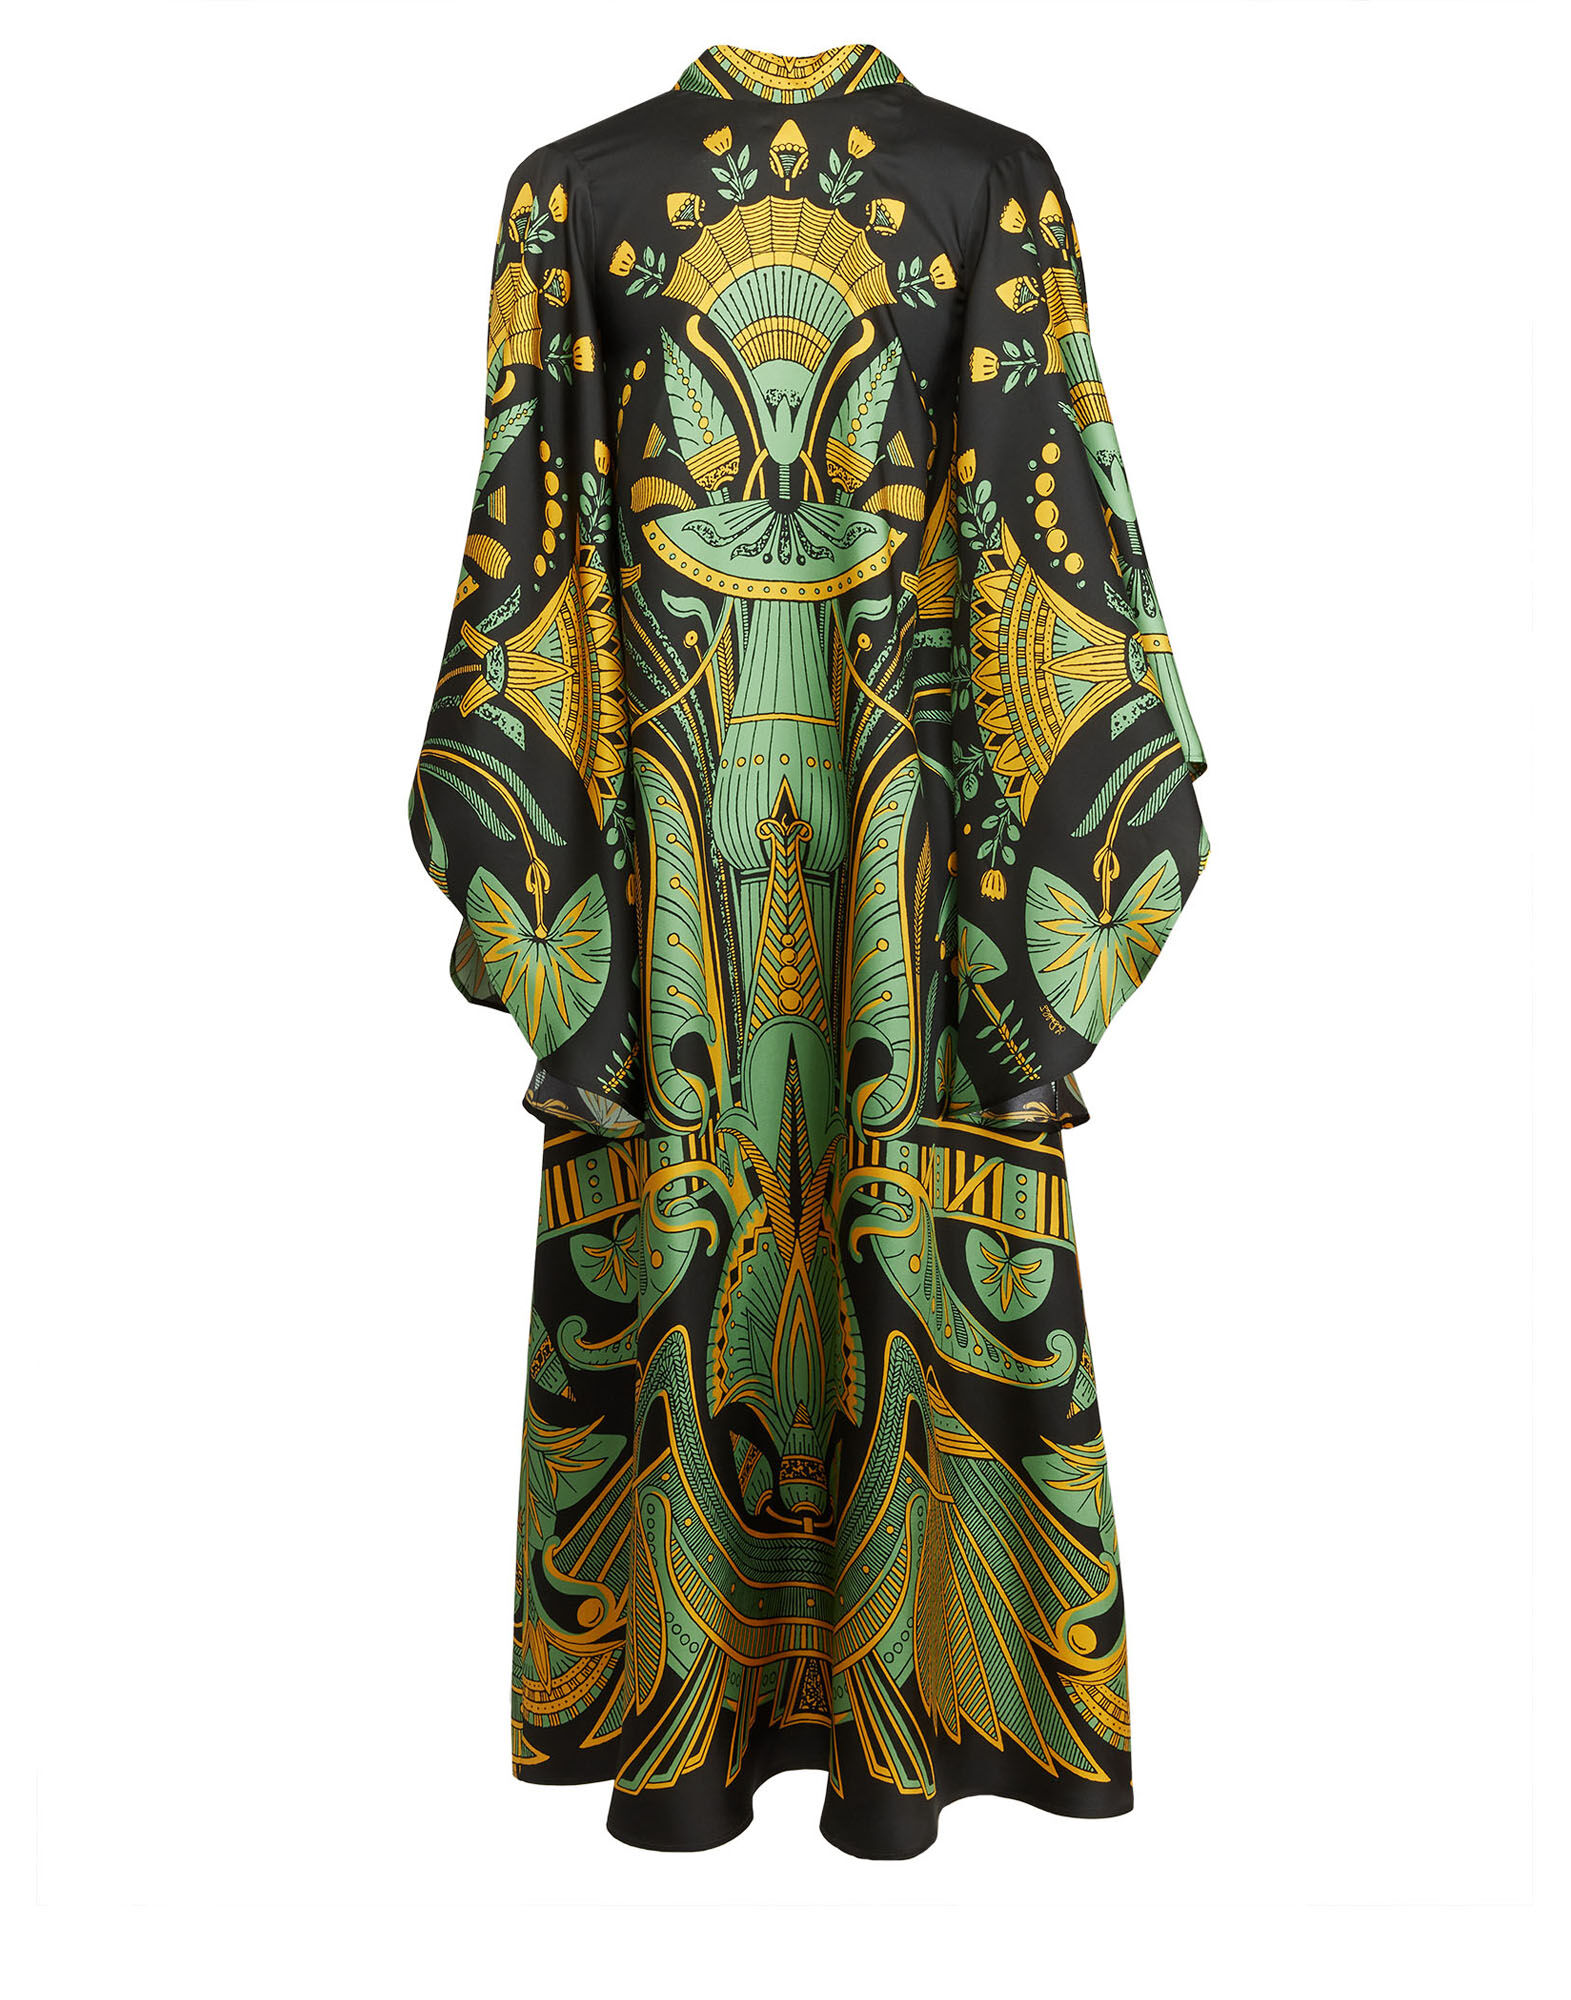 Versace Robes for Women | Bathrobes & Silk Robes | MhscfootShops